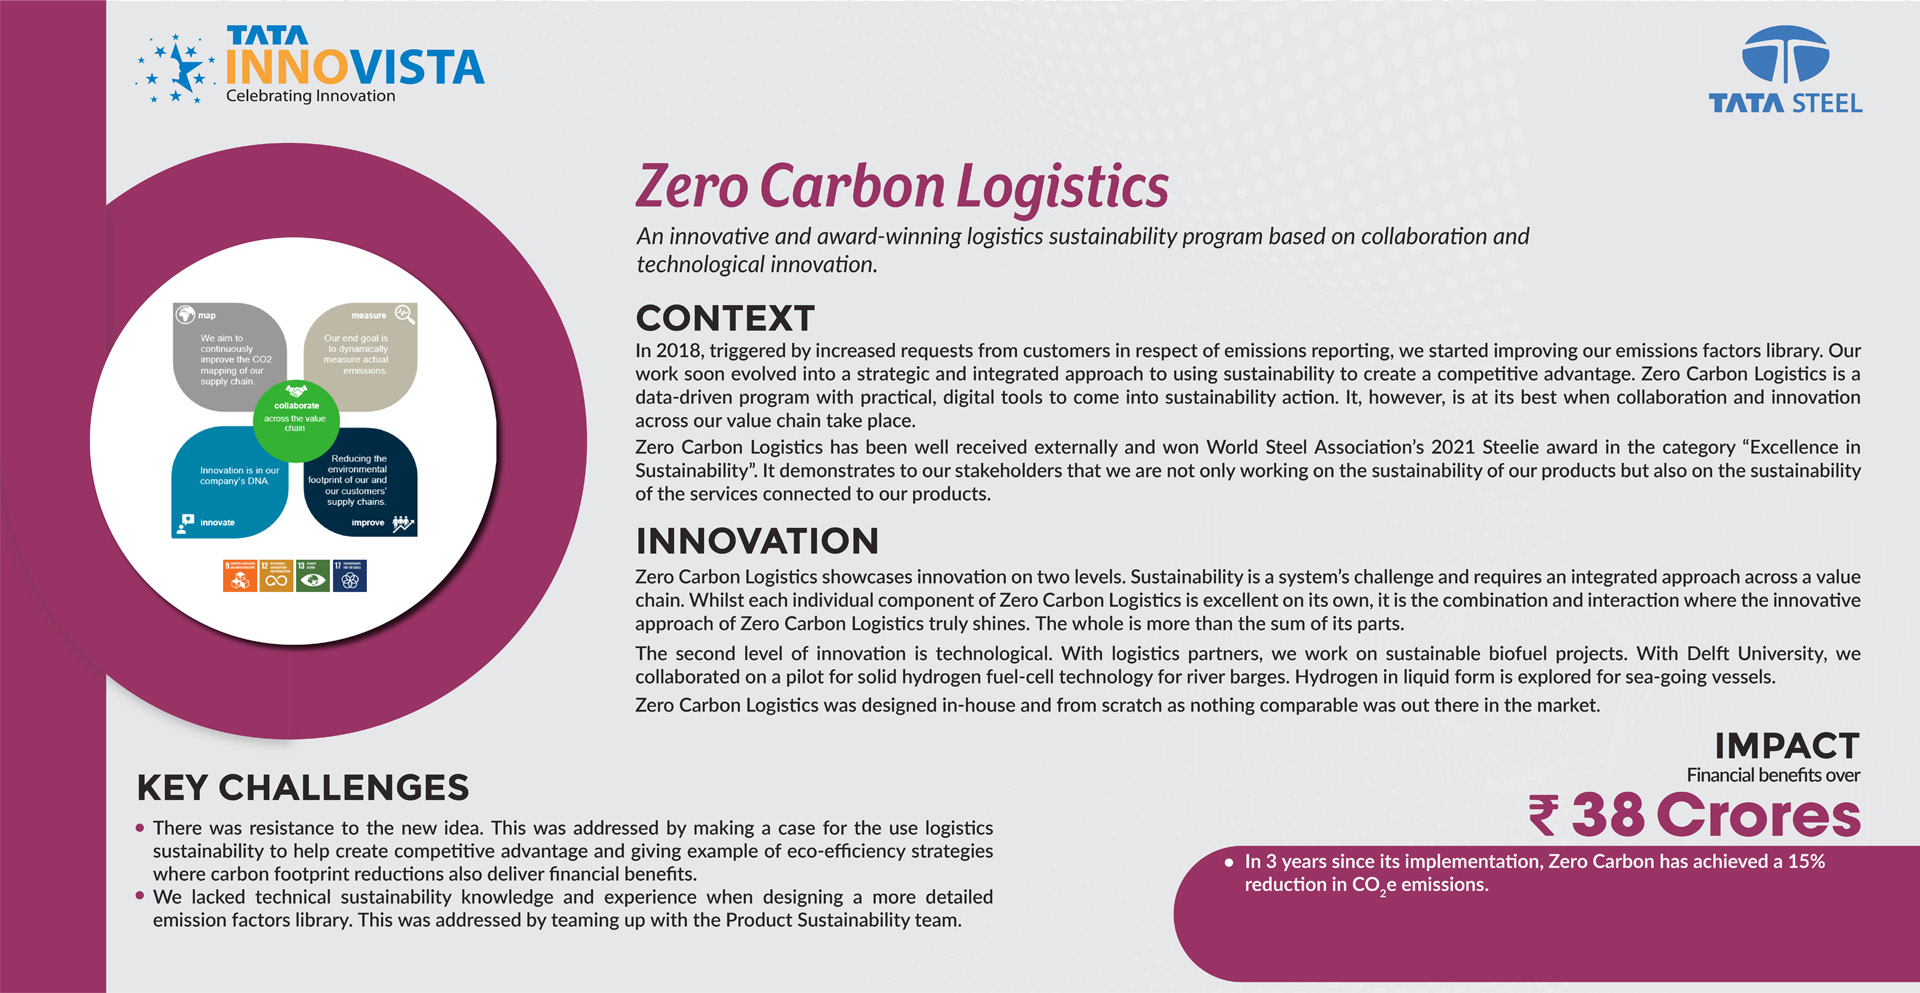 Tata Steel Europe - Zero Carbon Logistics